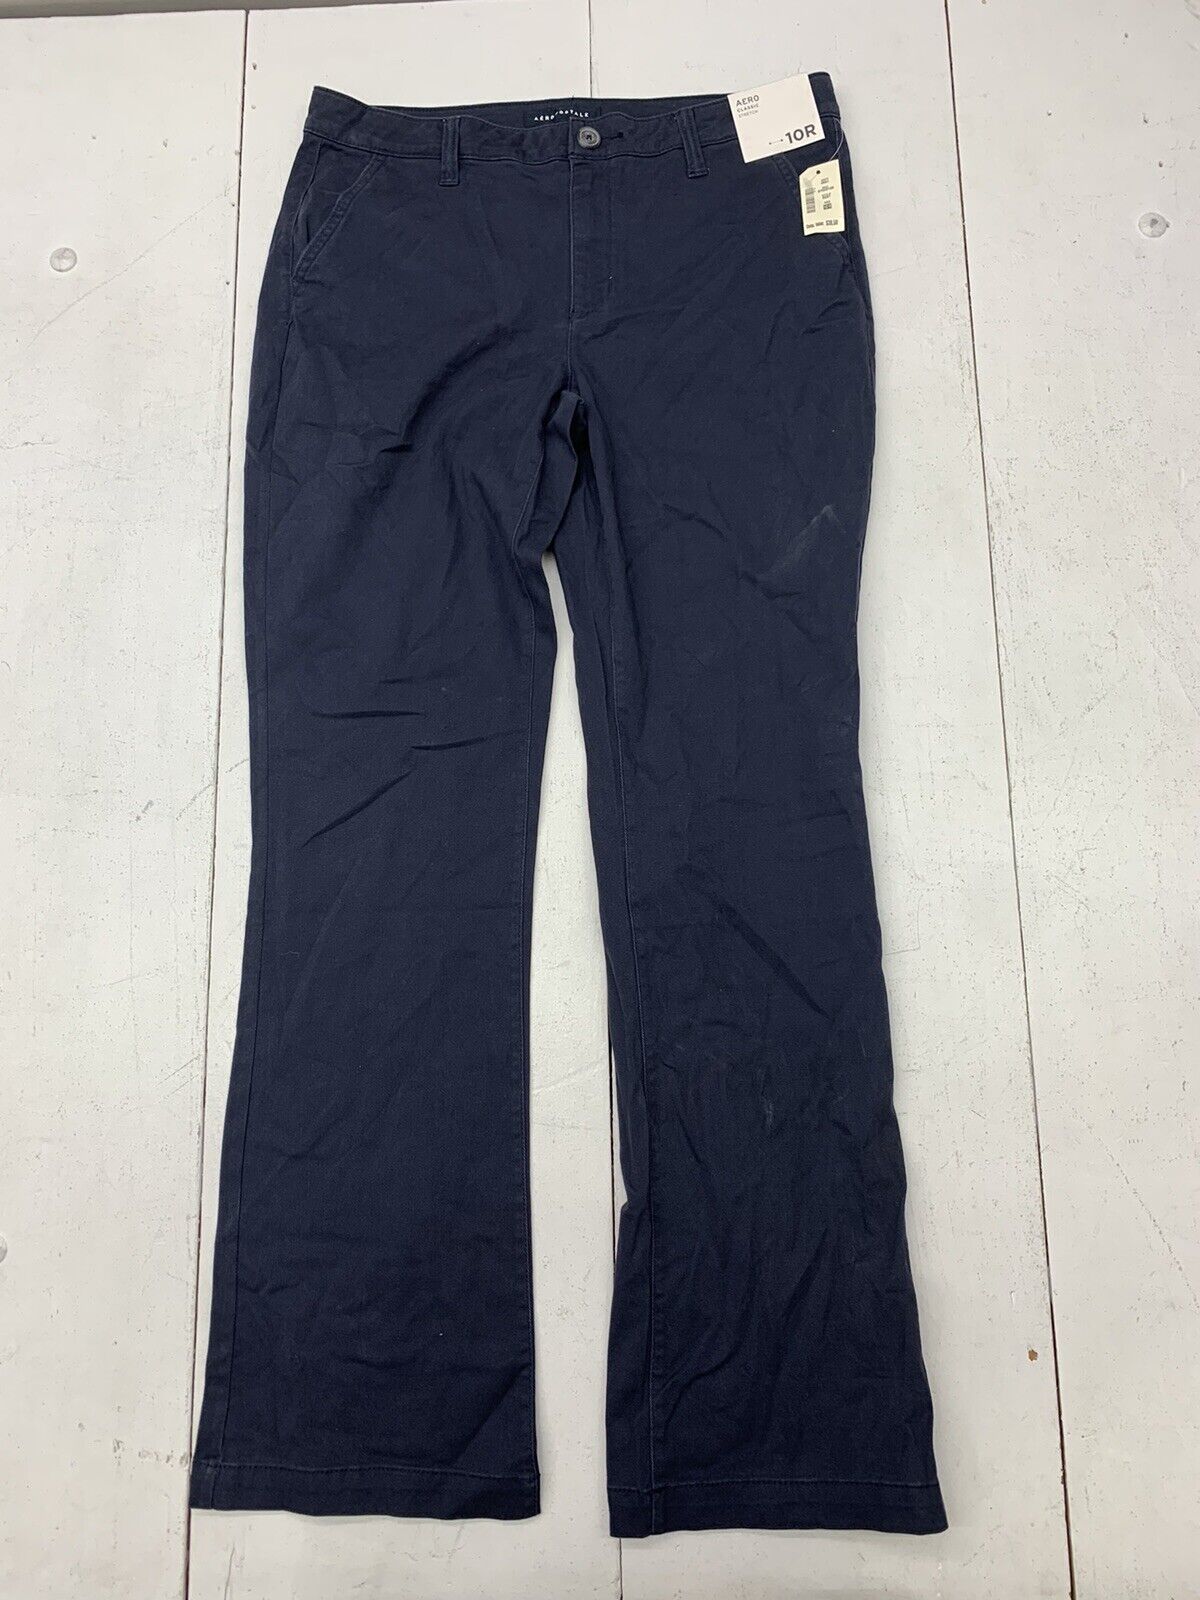 Aeropostale Womens Dark Blue Stretch Pants Size 10R - beyond exchange